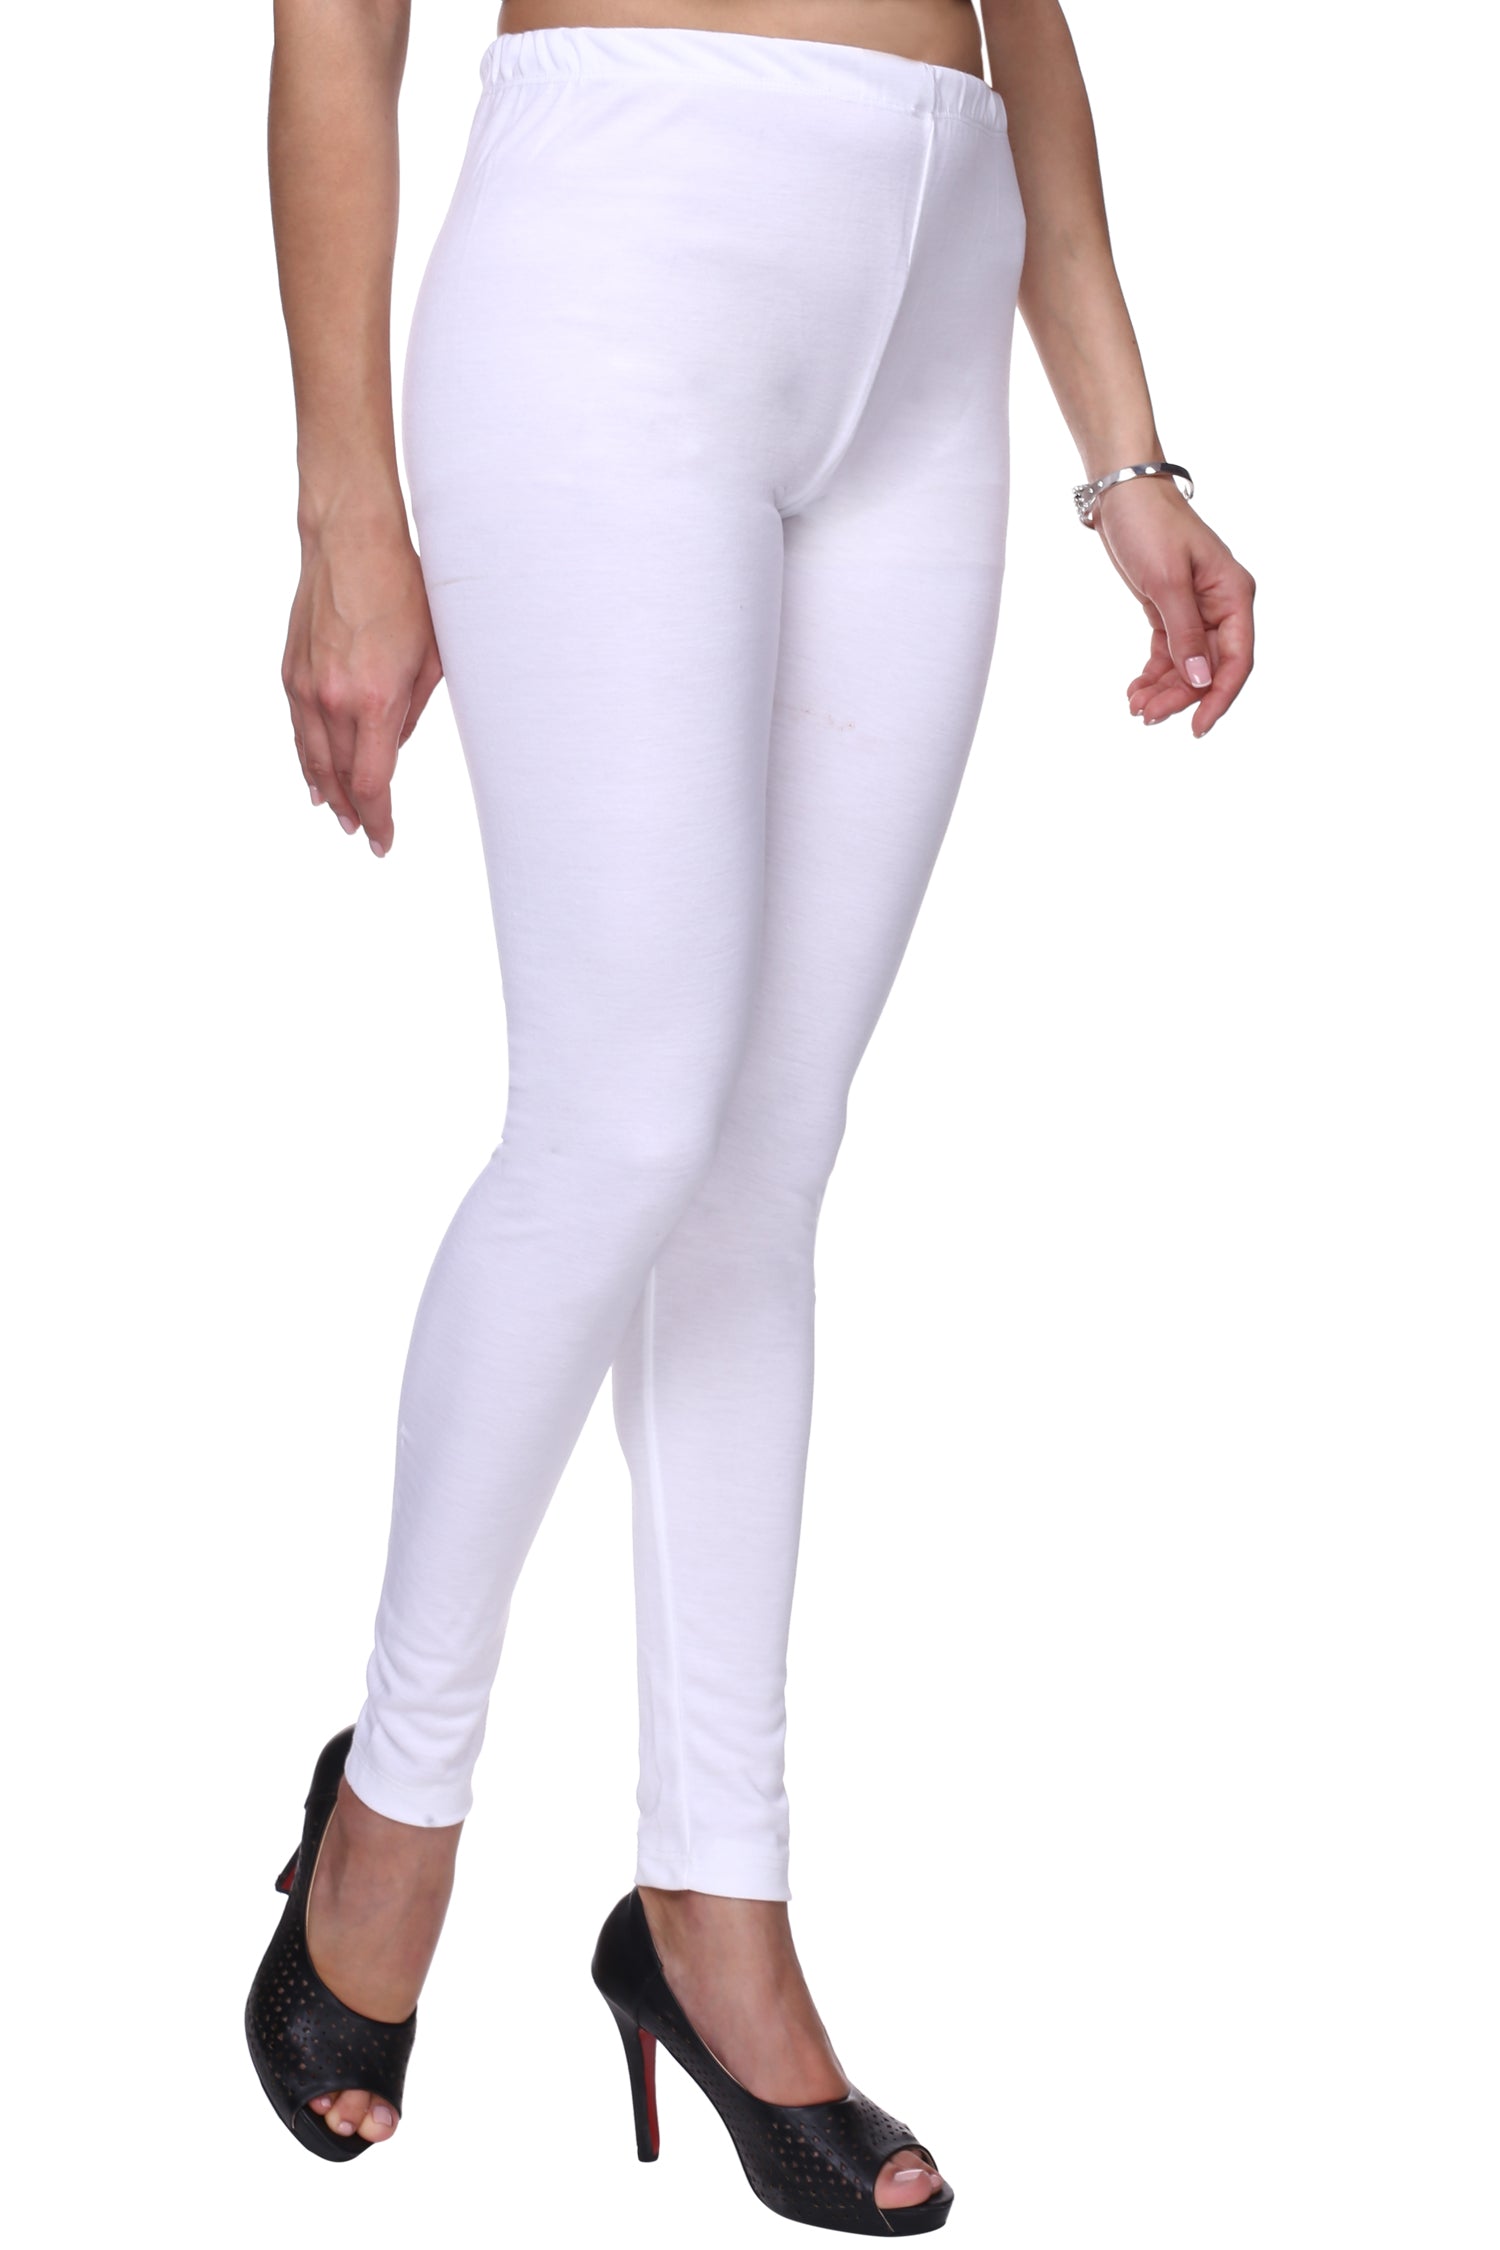 TRASA Women's Cotton Slim Fit Churidar Leggings - White